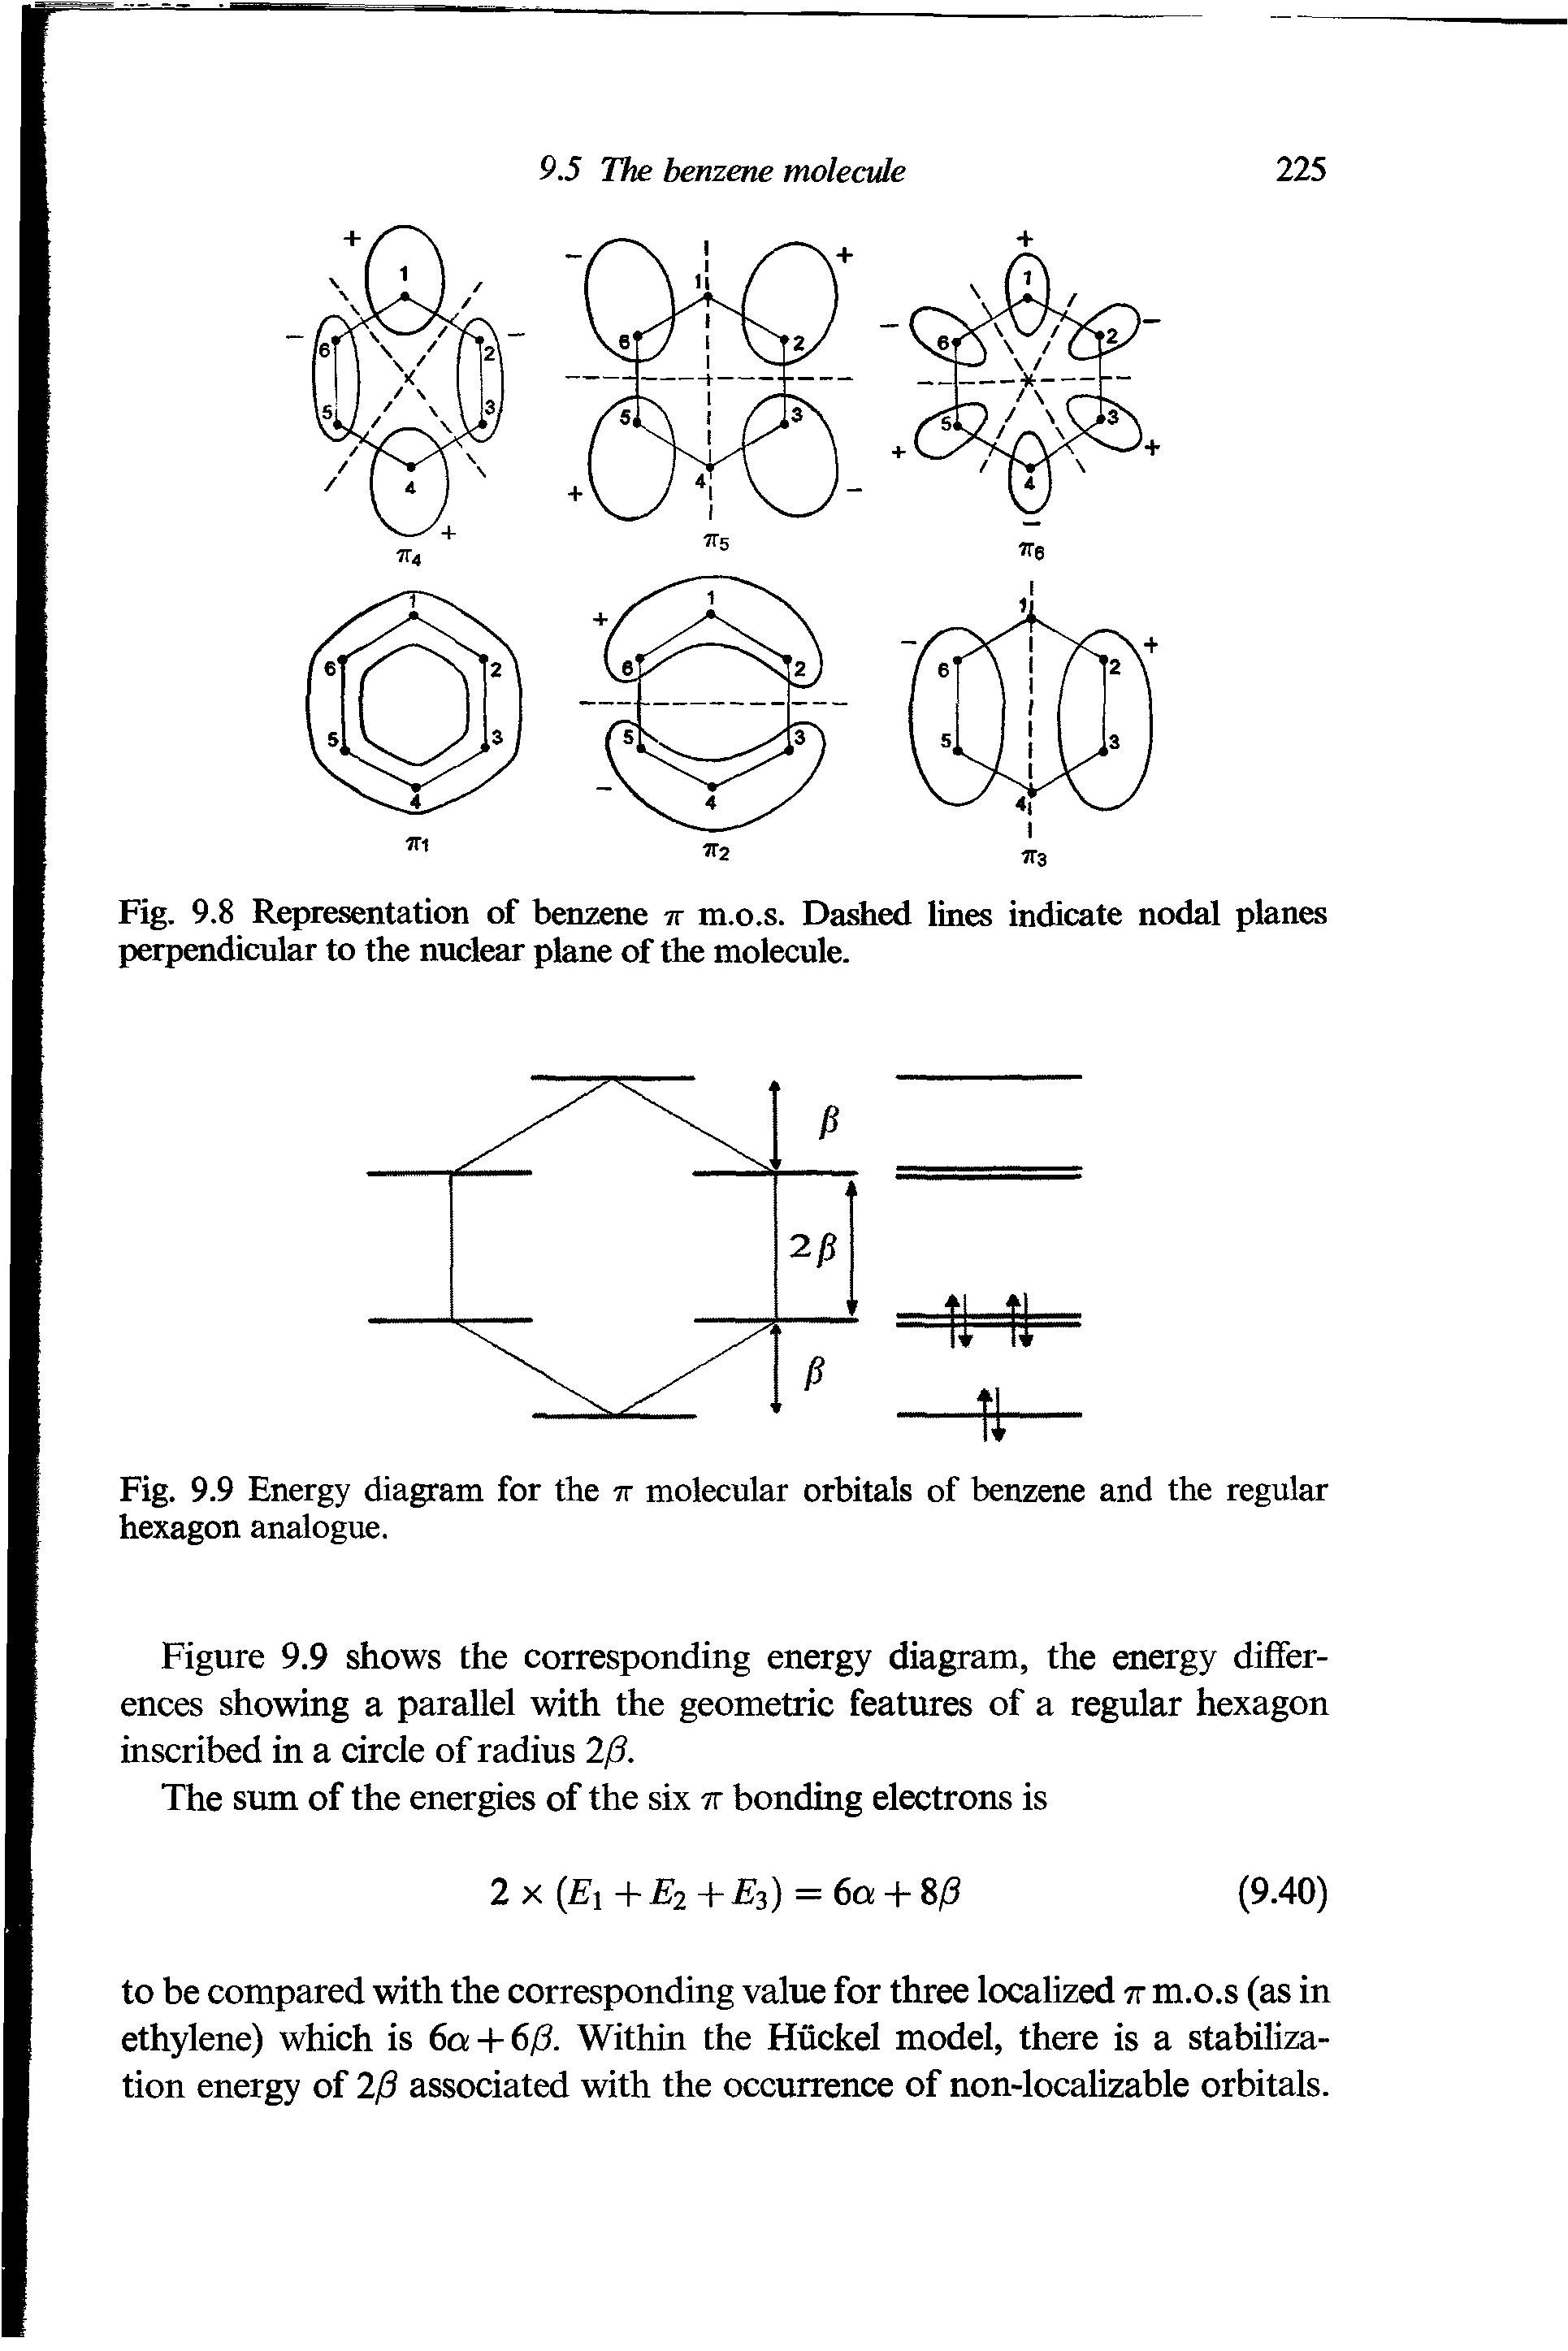 Fig. 9.9 Energy diagram for the tt molecular orbitals of benzene and the regular hexagon analogue.